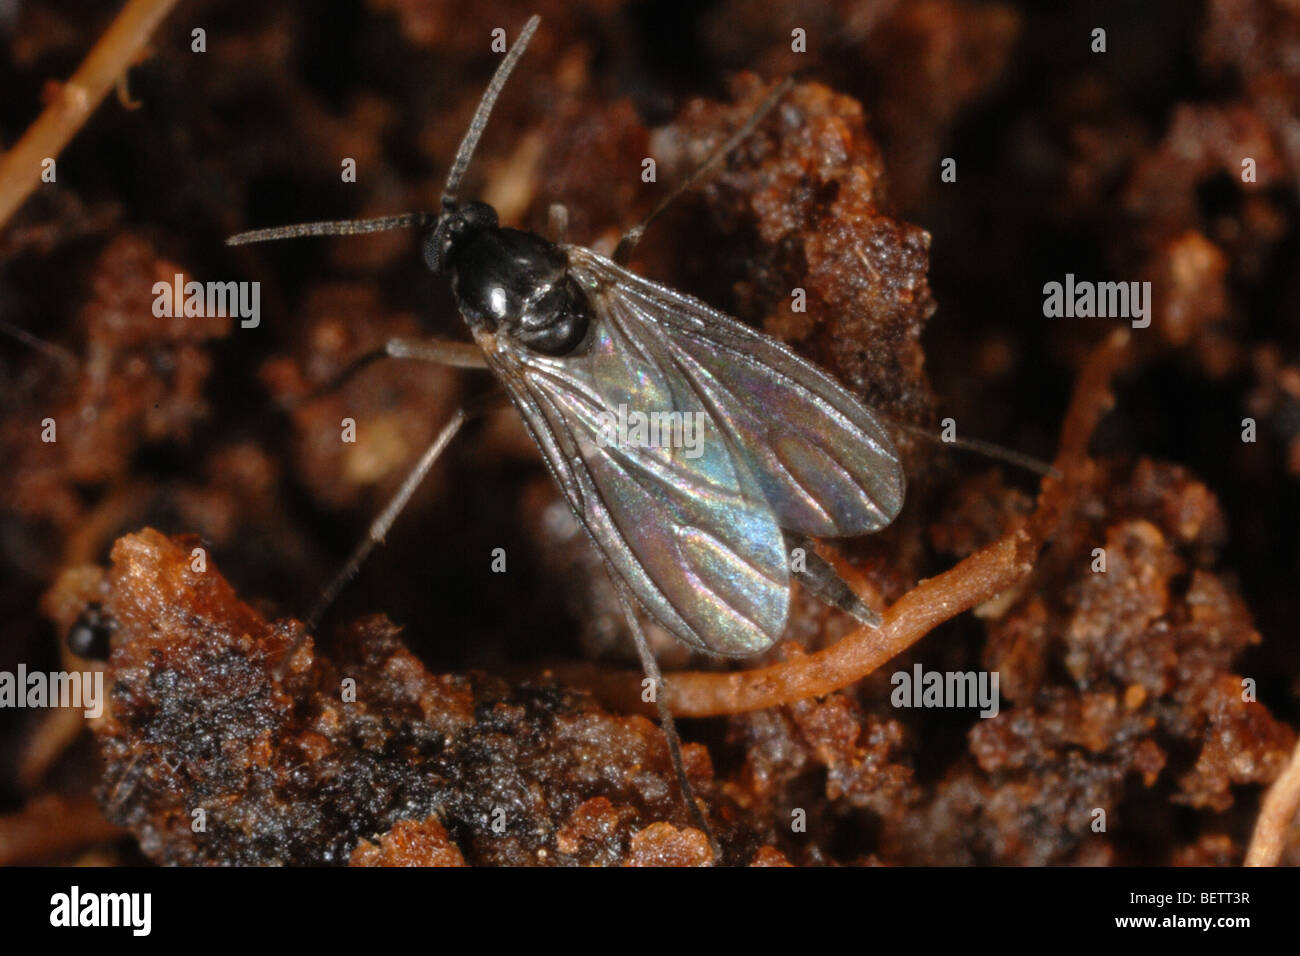 Adult sciarid fly (Bradysia difformis) on soil Stock Photo